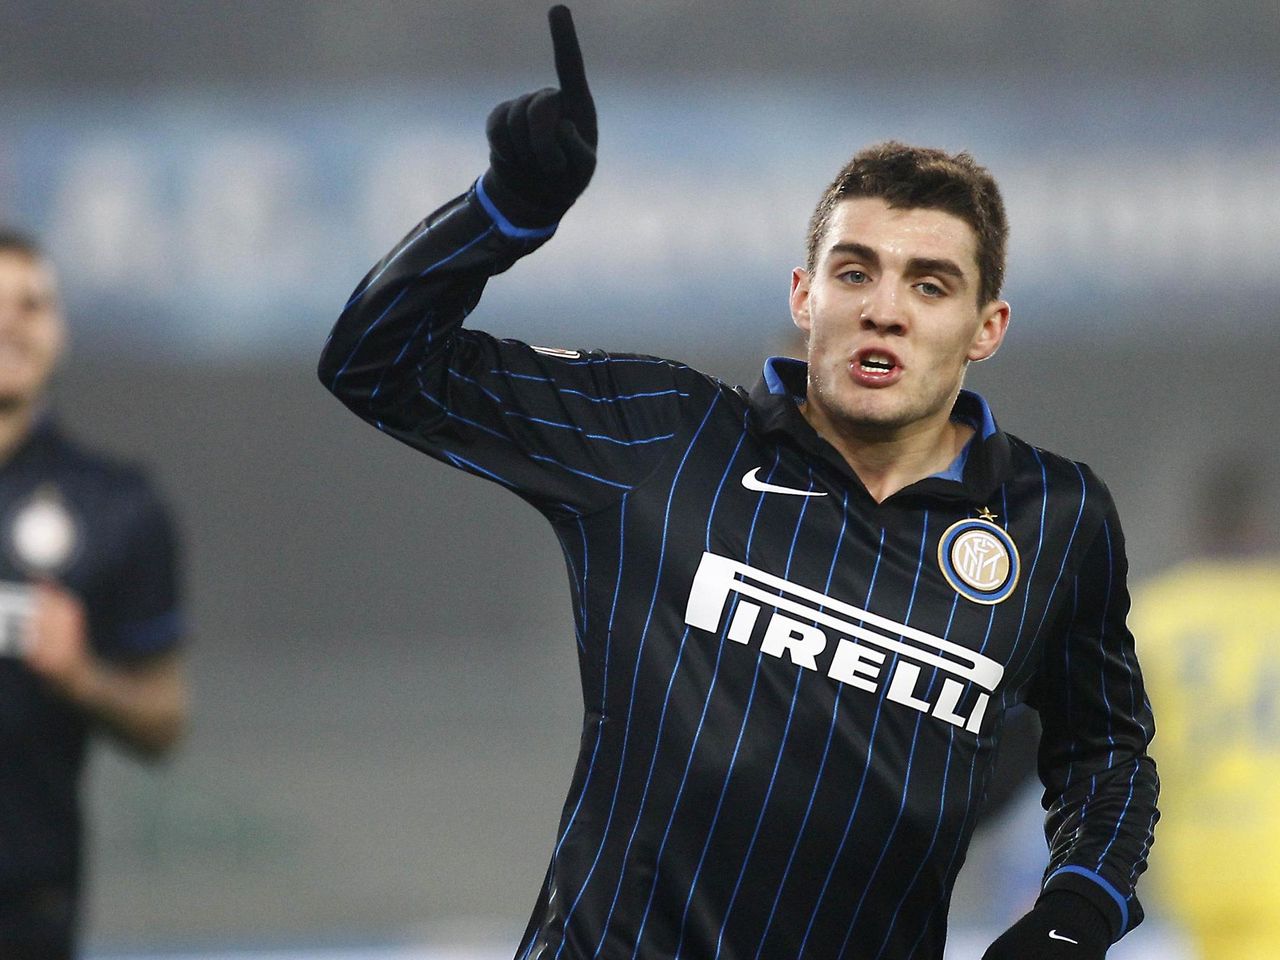 Profetie armoede grillen Roberto Mancini's Inter Milan climb table with win at Chievo - Eurosport